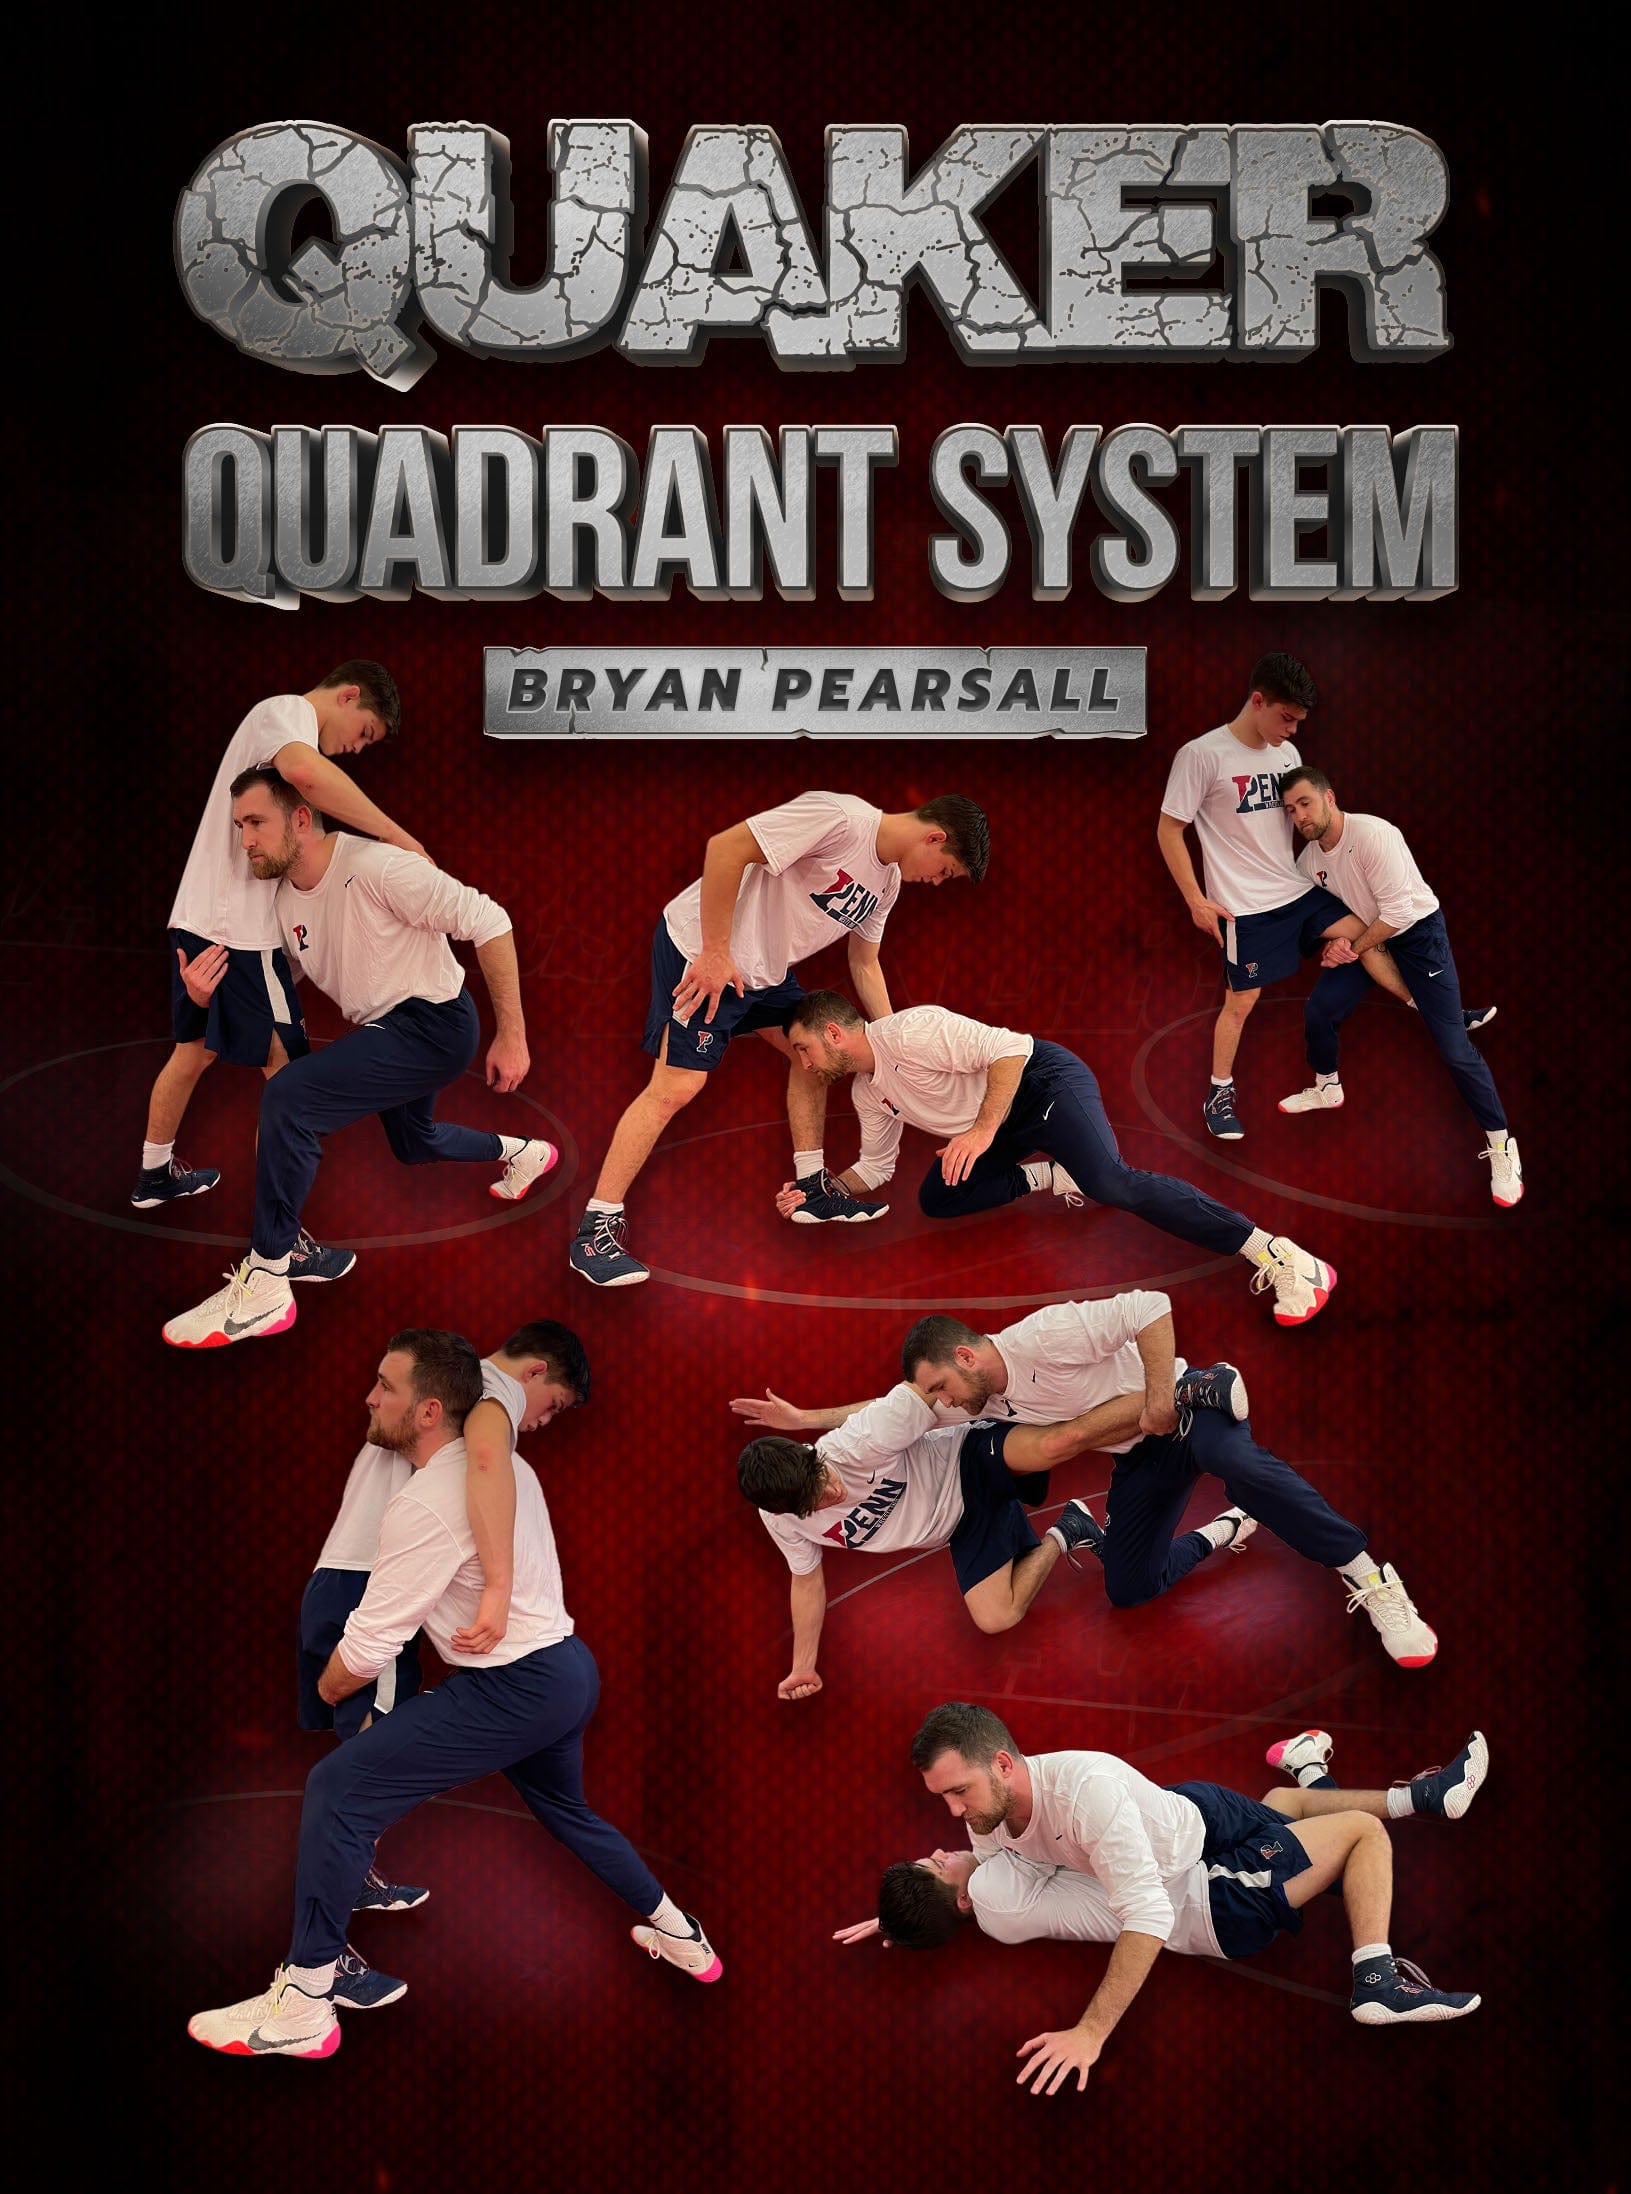 Quaker Quadrant System by Bryan Pearsall - Fanatic Wrestling